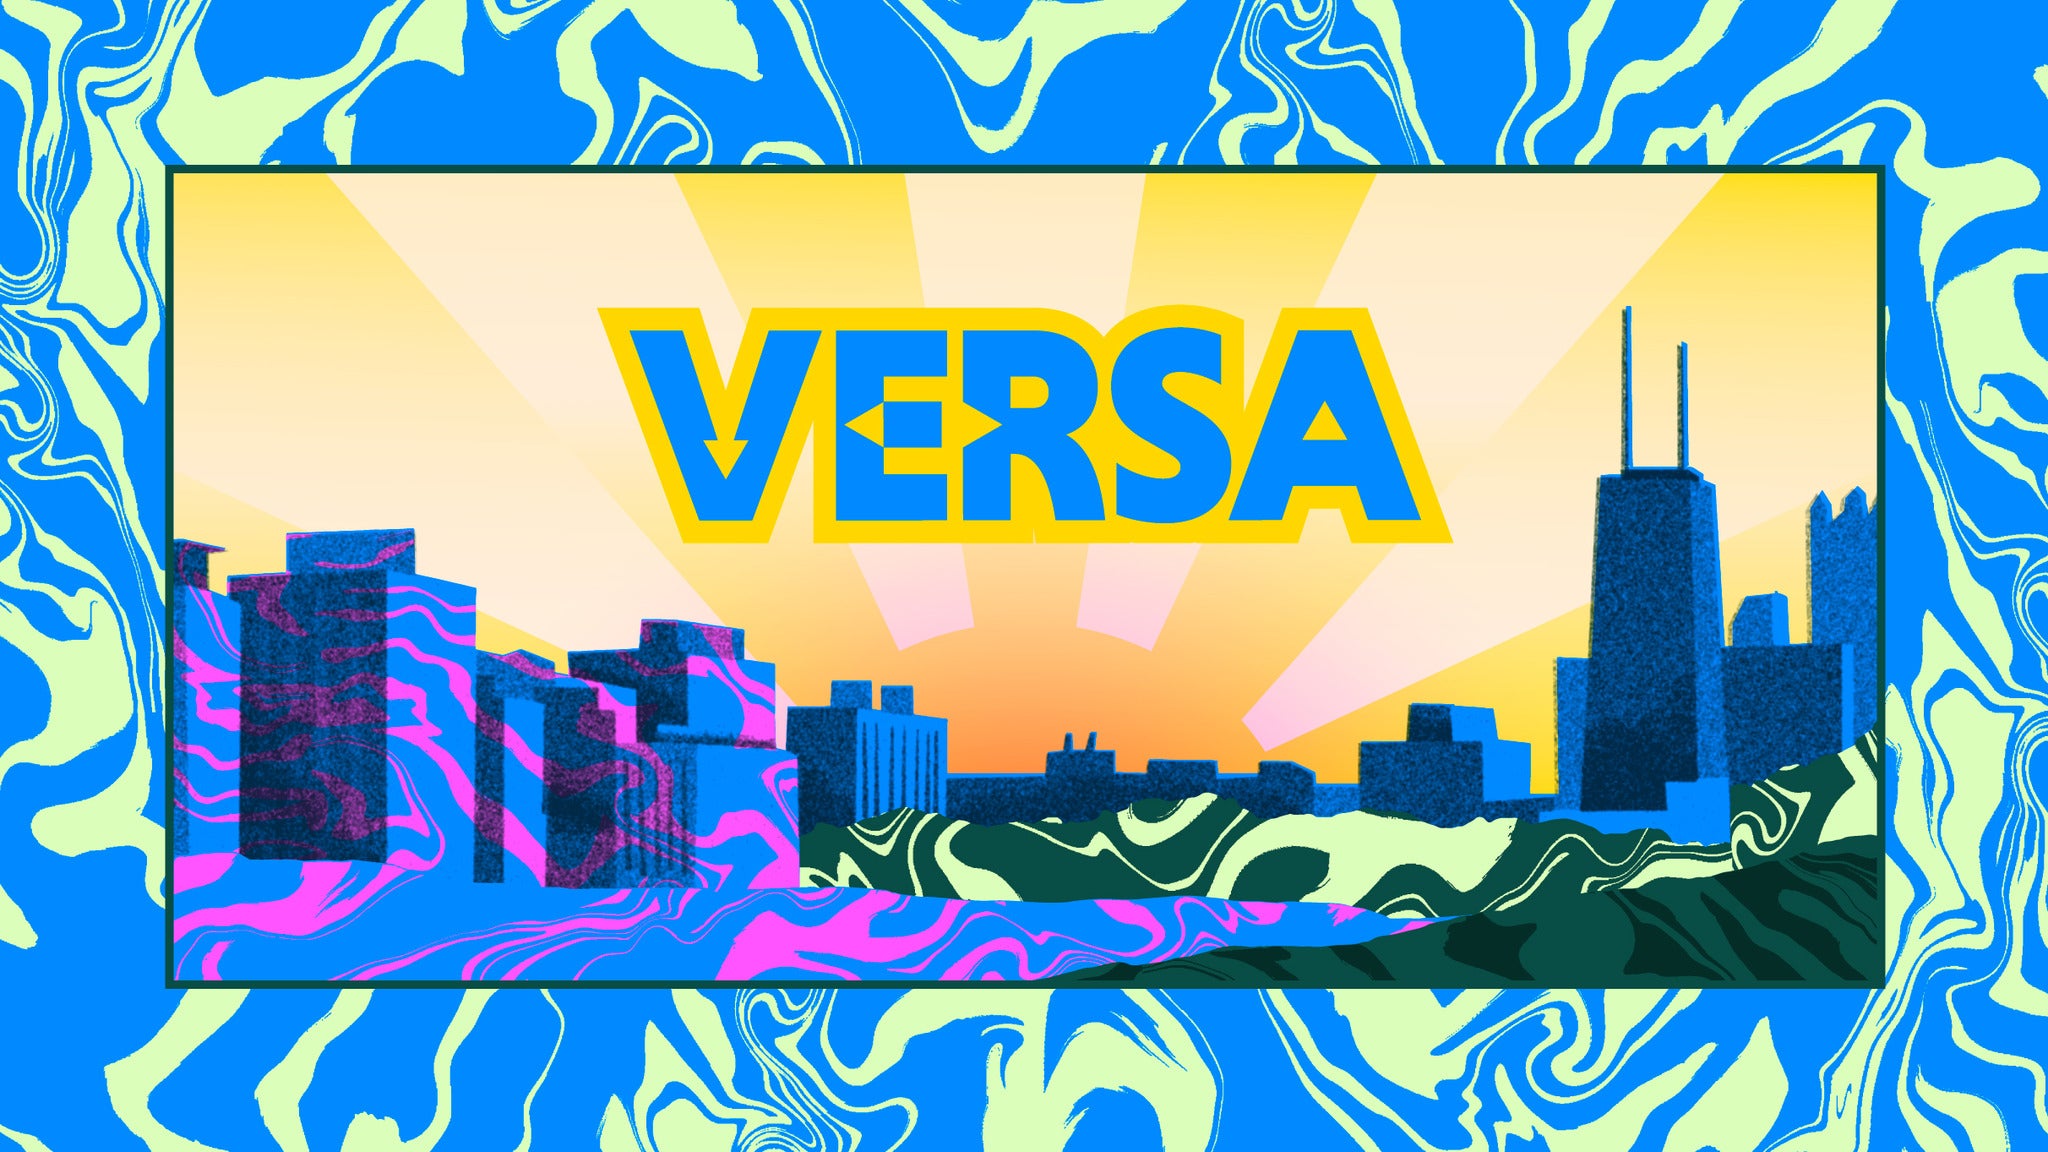 VERSA Festival presale information on freepresalepasswords.com